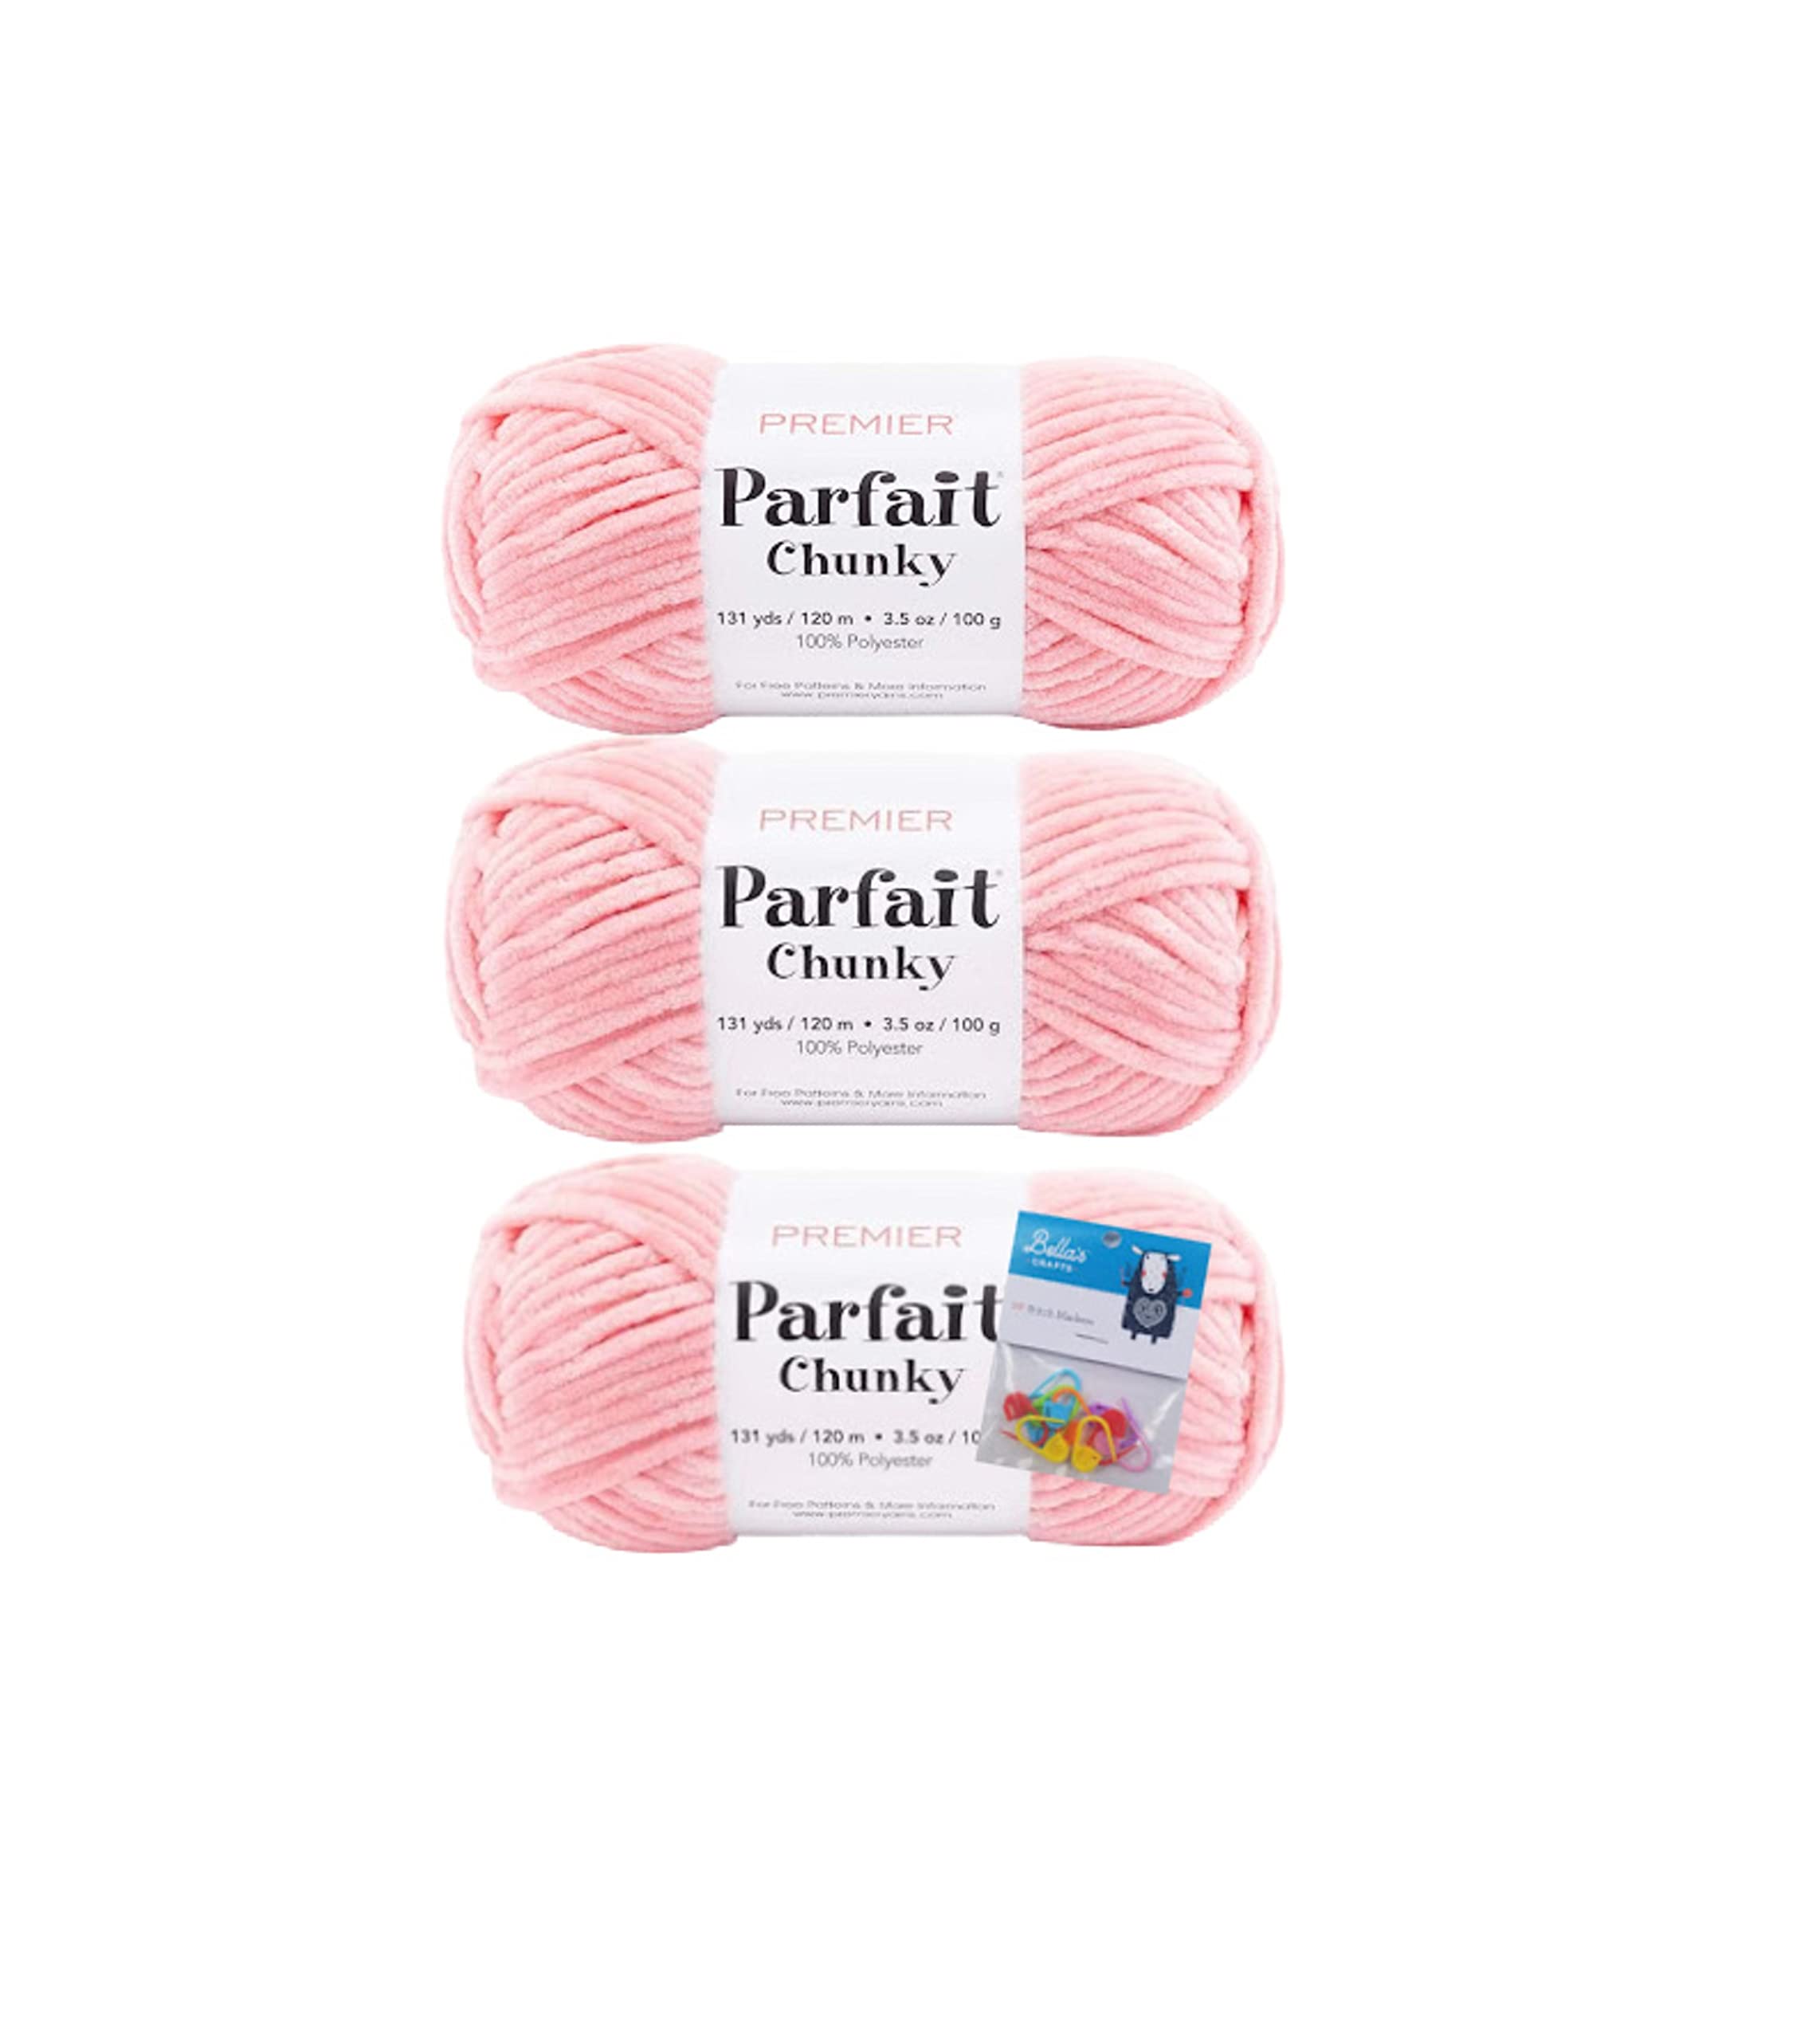 Premier Parfait Chunky—Bag of 3 Yarn Pack